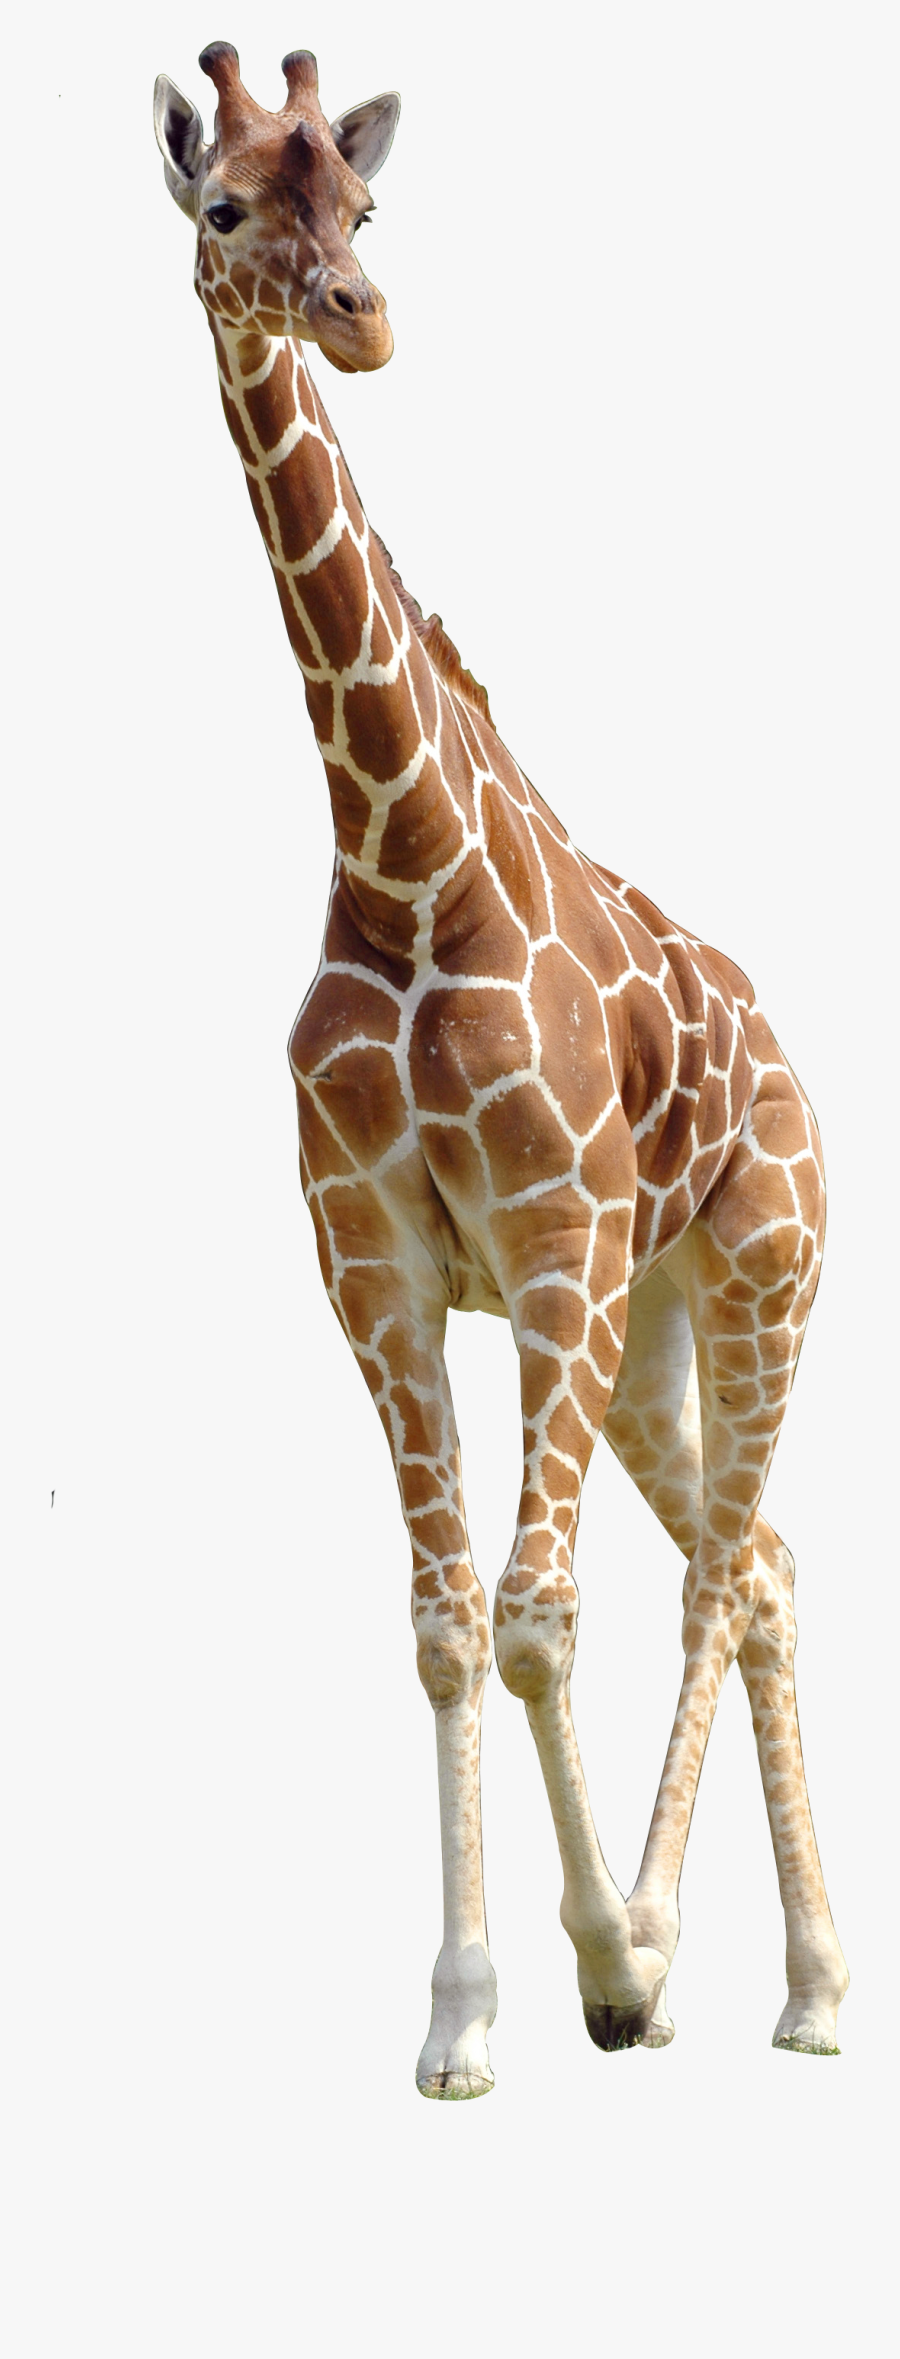 Giraffe Northern Download Free Image Clipart - Giraffe Png, Transparent Clipart